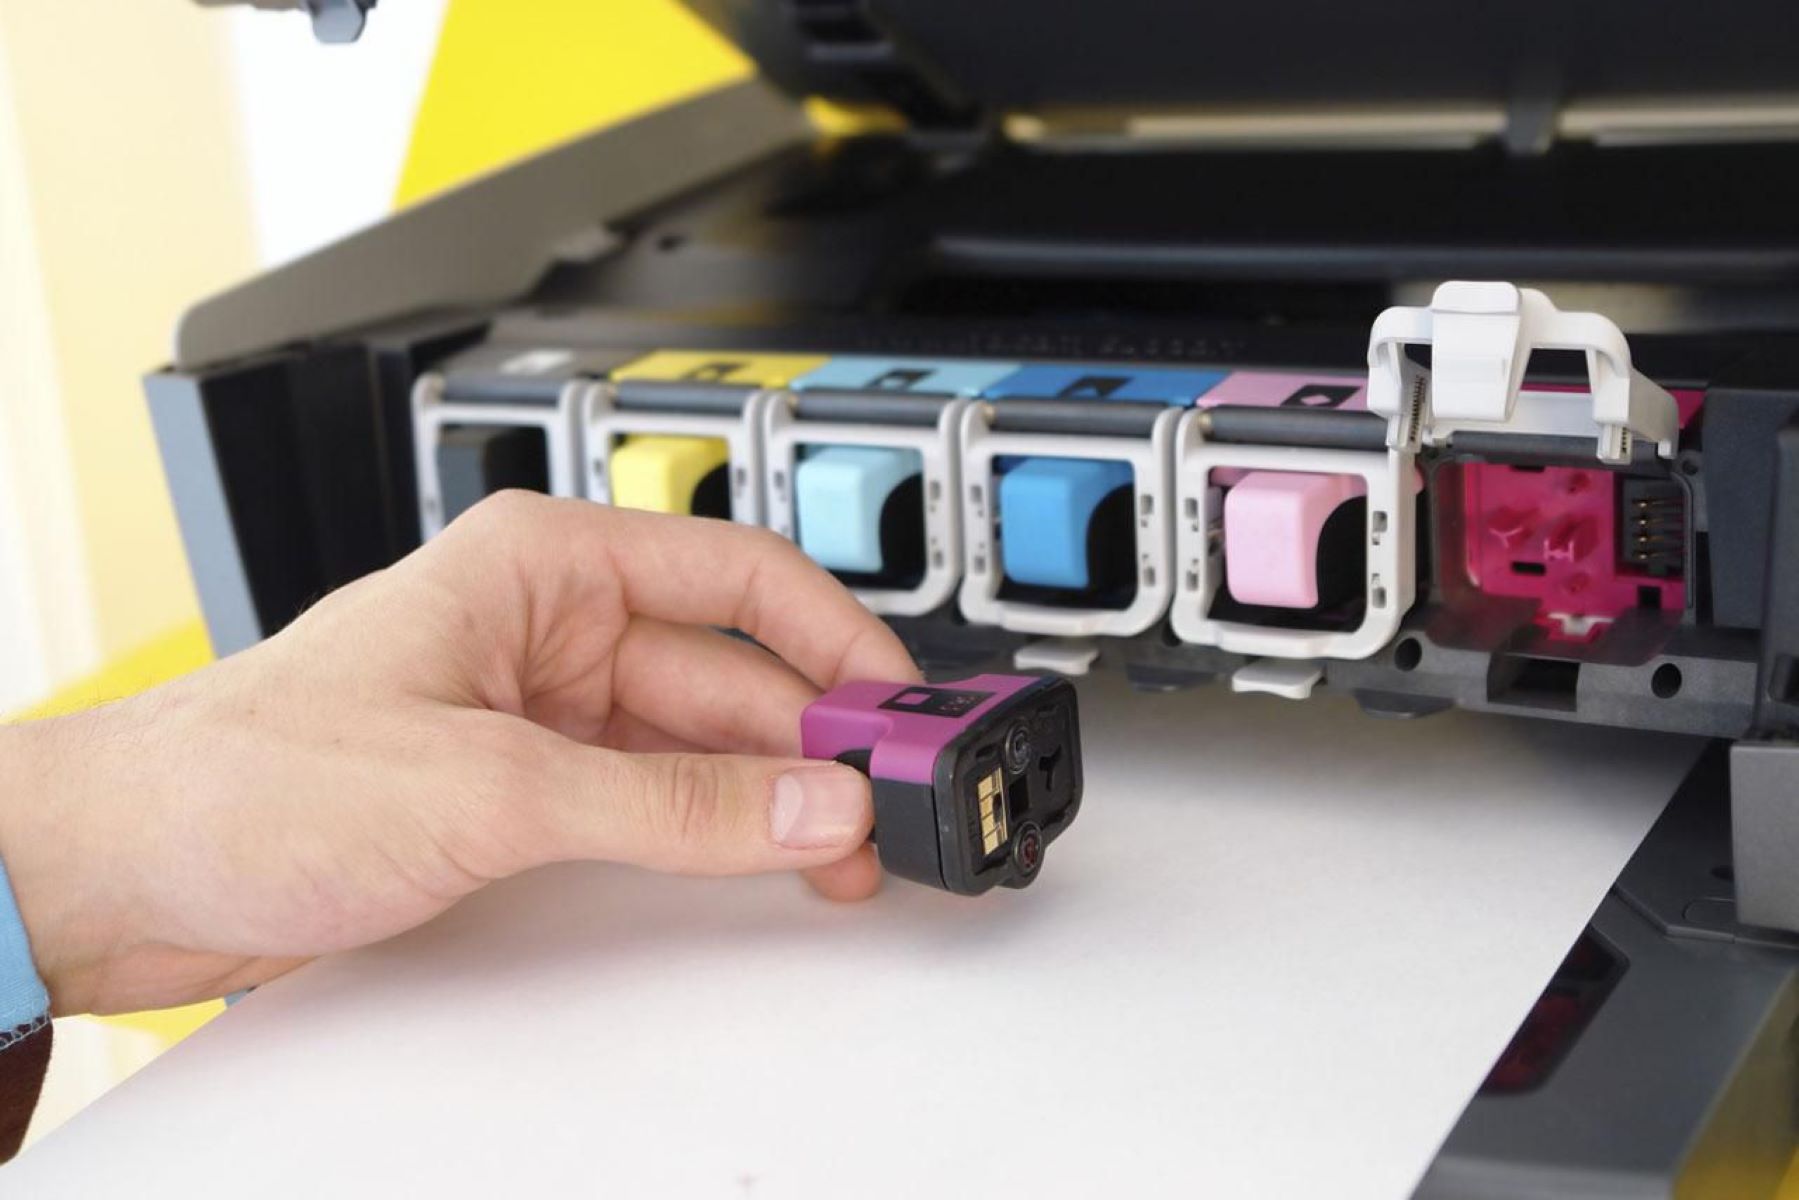 How To Calibrate A Printer